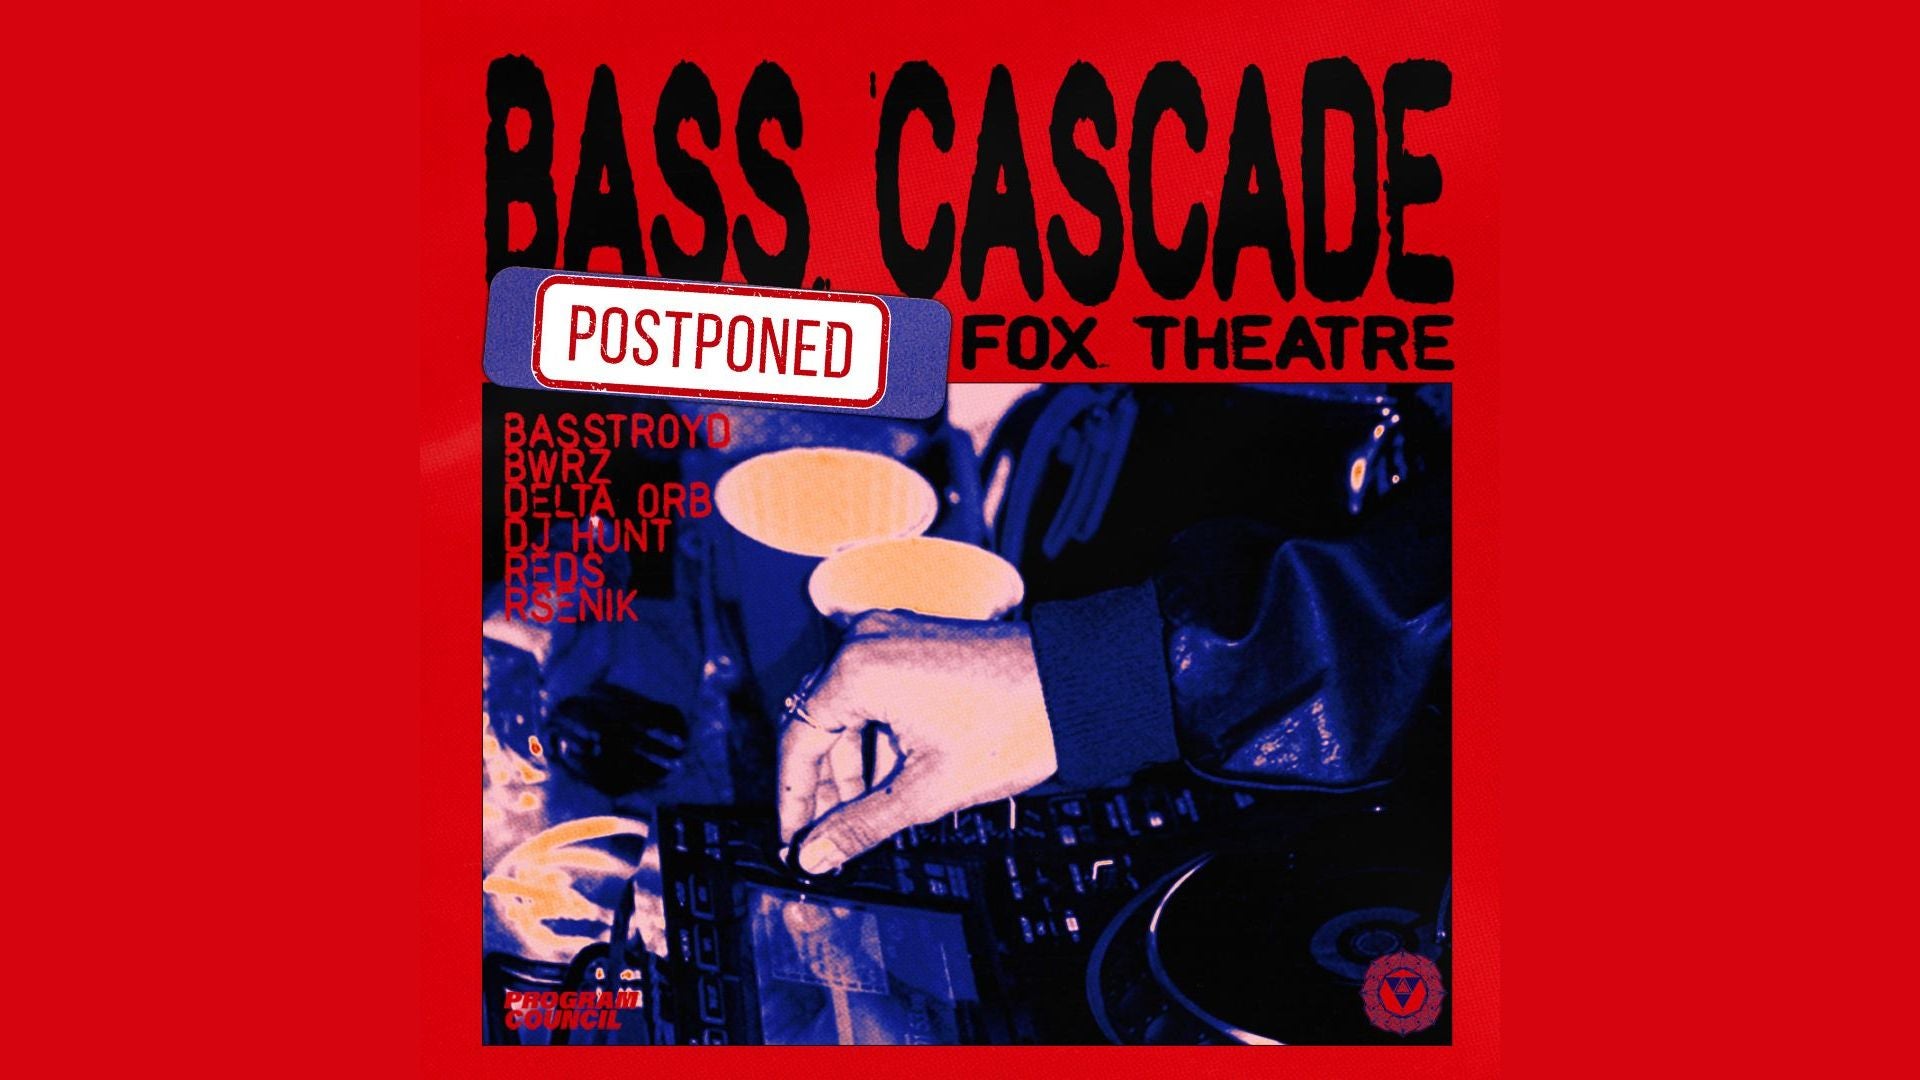 More Info for BASS CASCADE feat. BASSTROYD, BWRZ, DELTA ORB, DJ HUNT, ABLATIVE, RSENIK